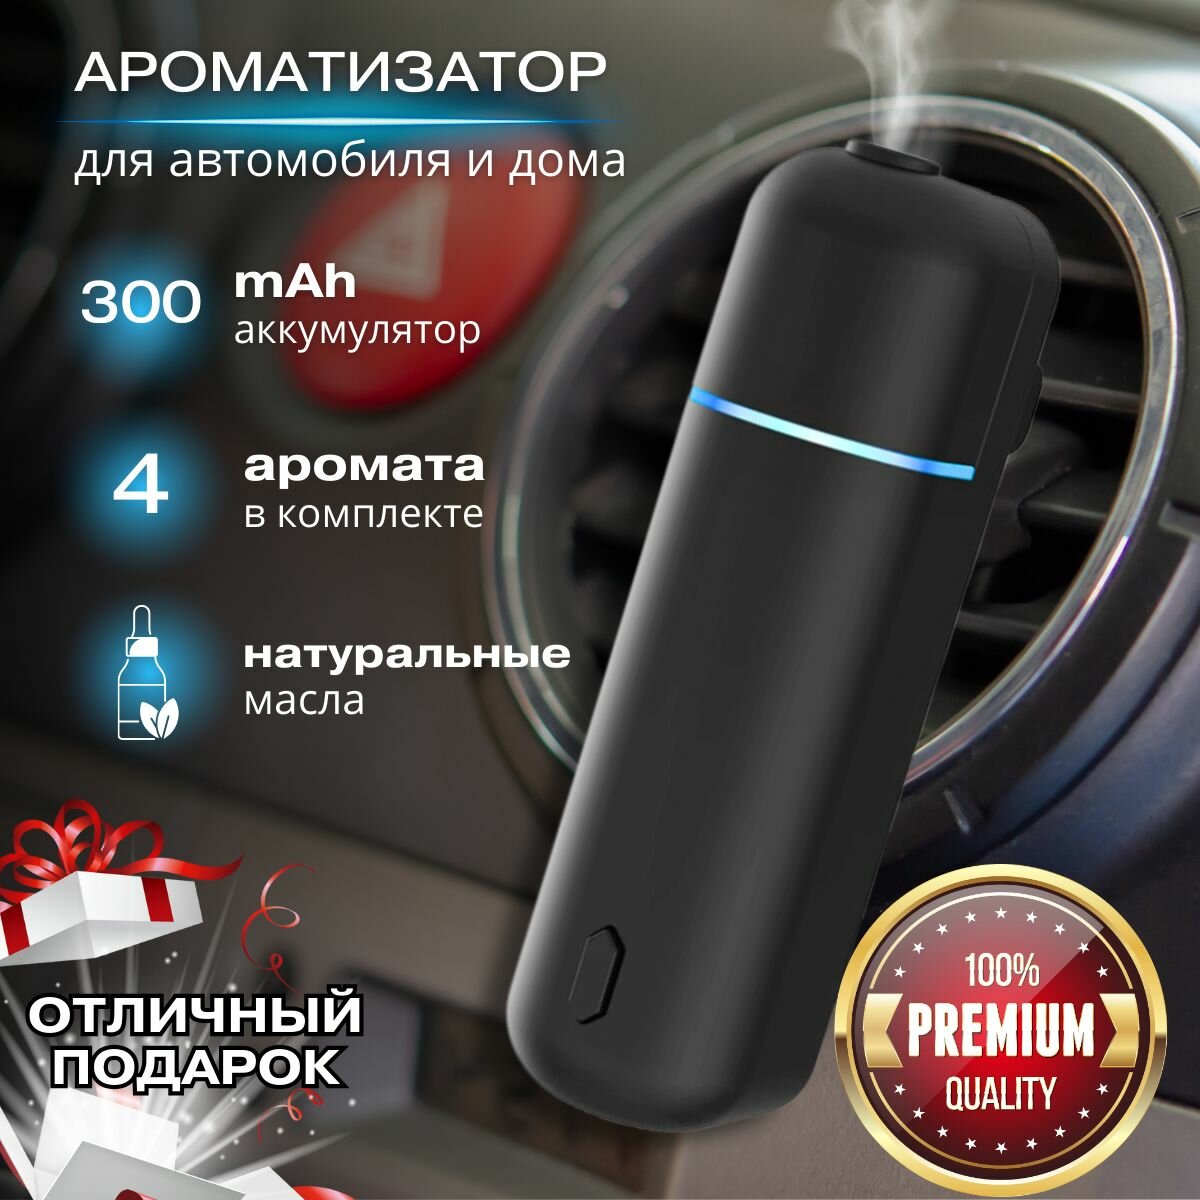 Iaa AROMA Ароматизатор ультразвуковой для автомобиля, набор с 4 ароматами фрезия и эвкалипт по 5 мл.